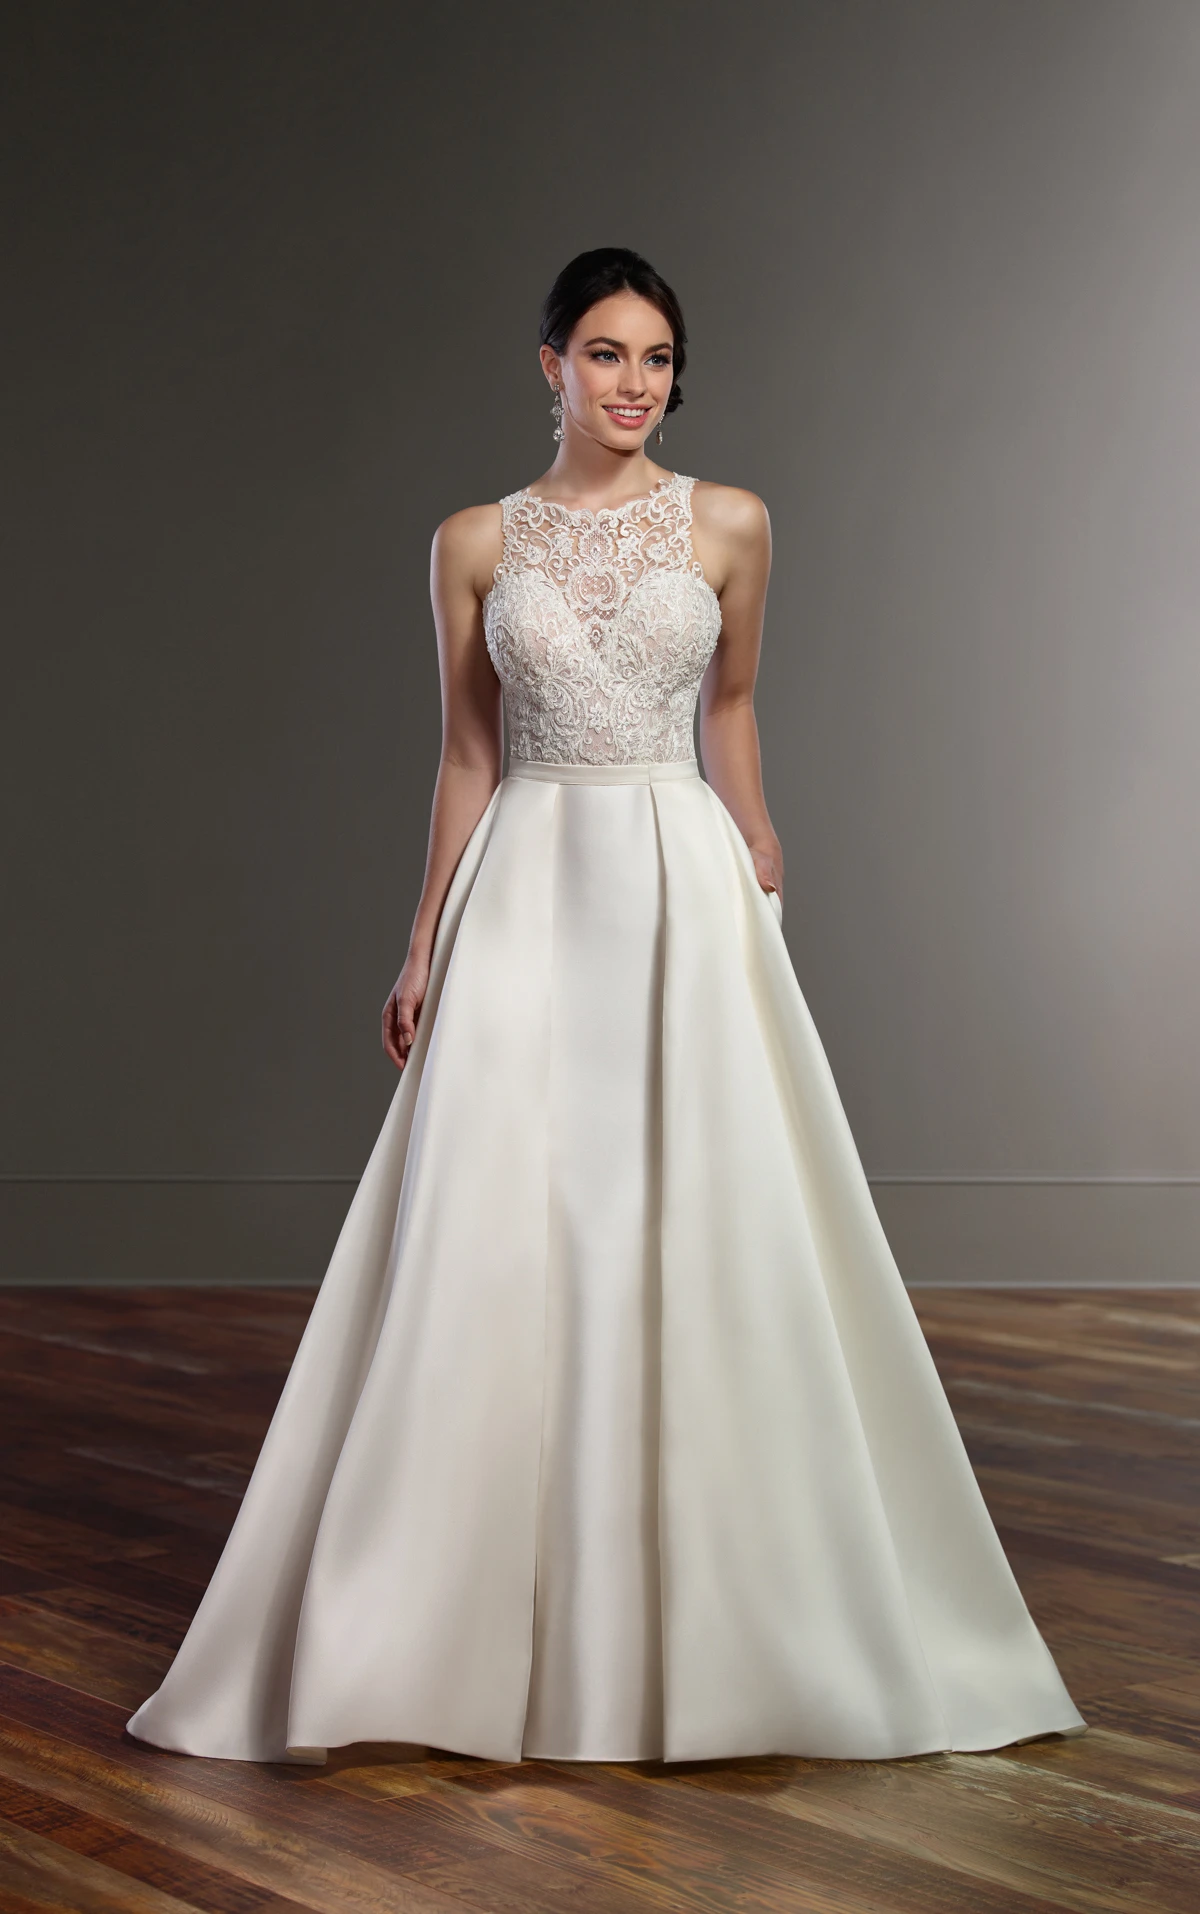 Detachable Bridal Sleeves #121 Detachable Wedding Dress Sleeves,Detachable Off Shoulder Sleeves For Wedding Dress,Detachable Bridal Sleeves